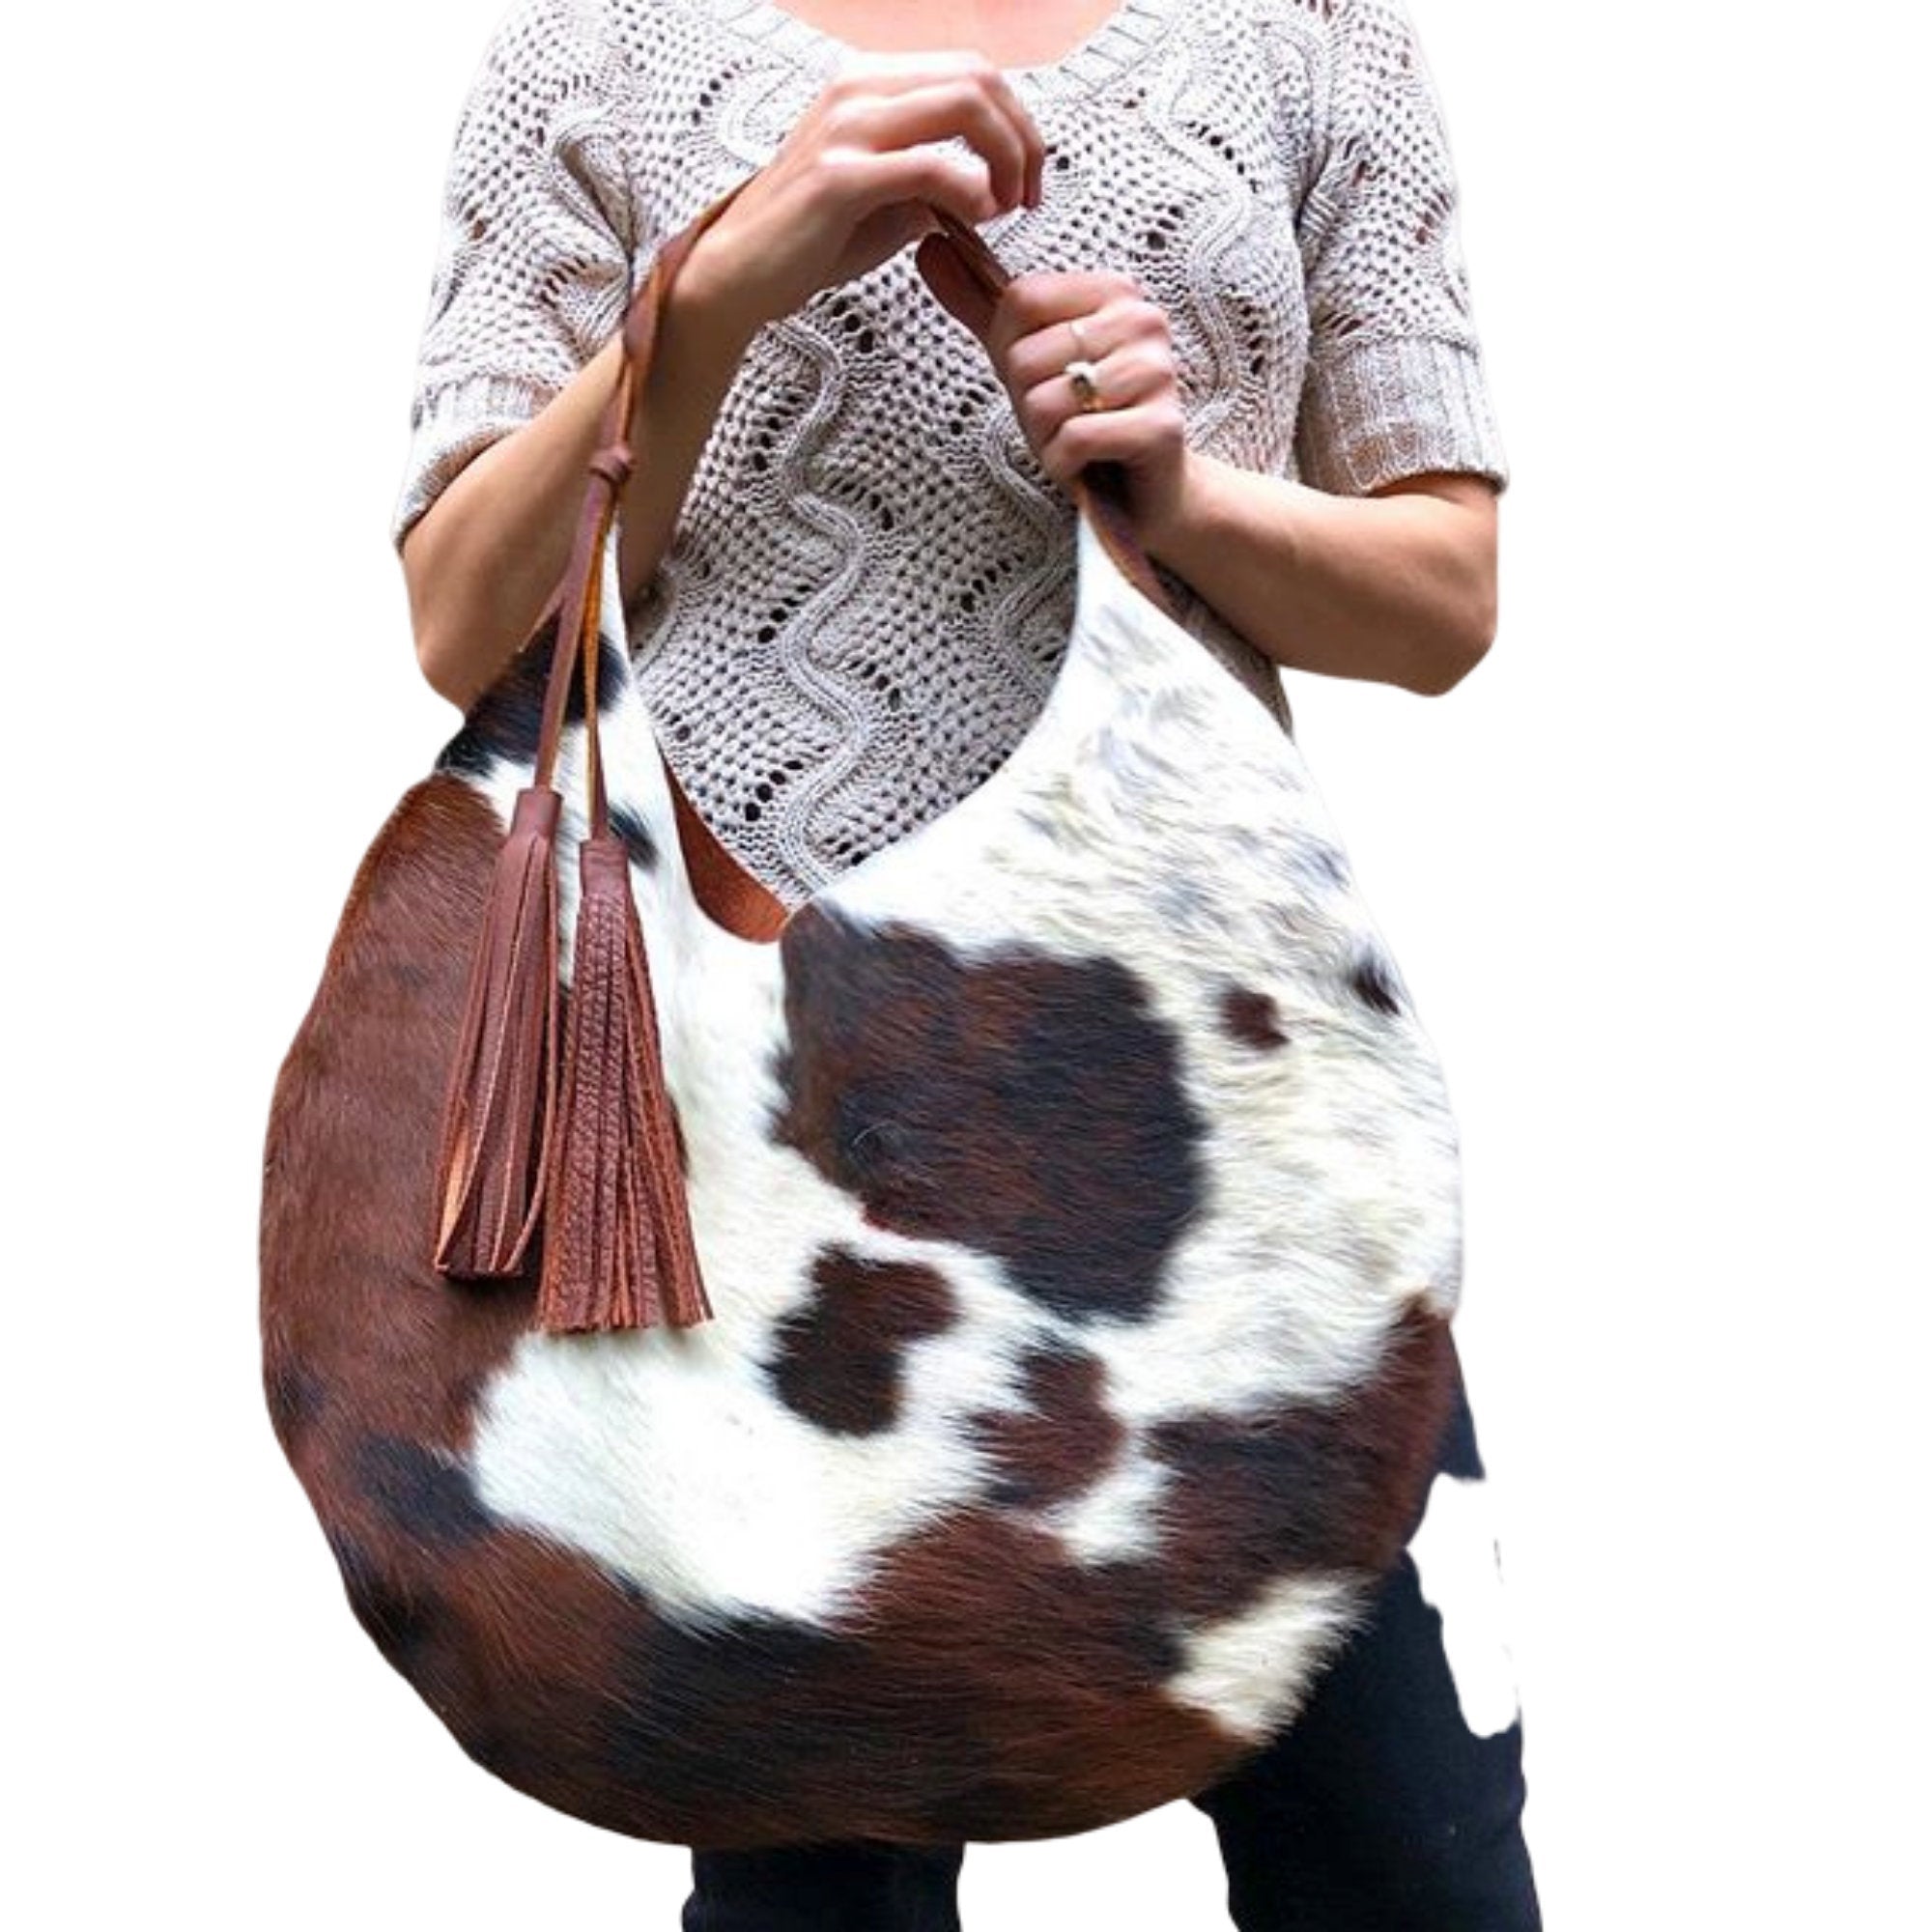 2Way luxury cowhide mini Boston bag diagonally hung shoulder bag